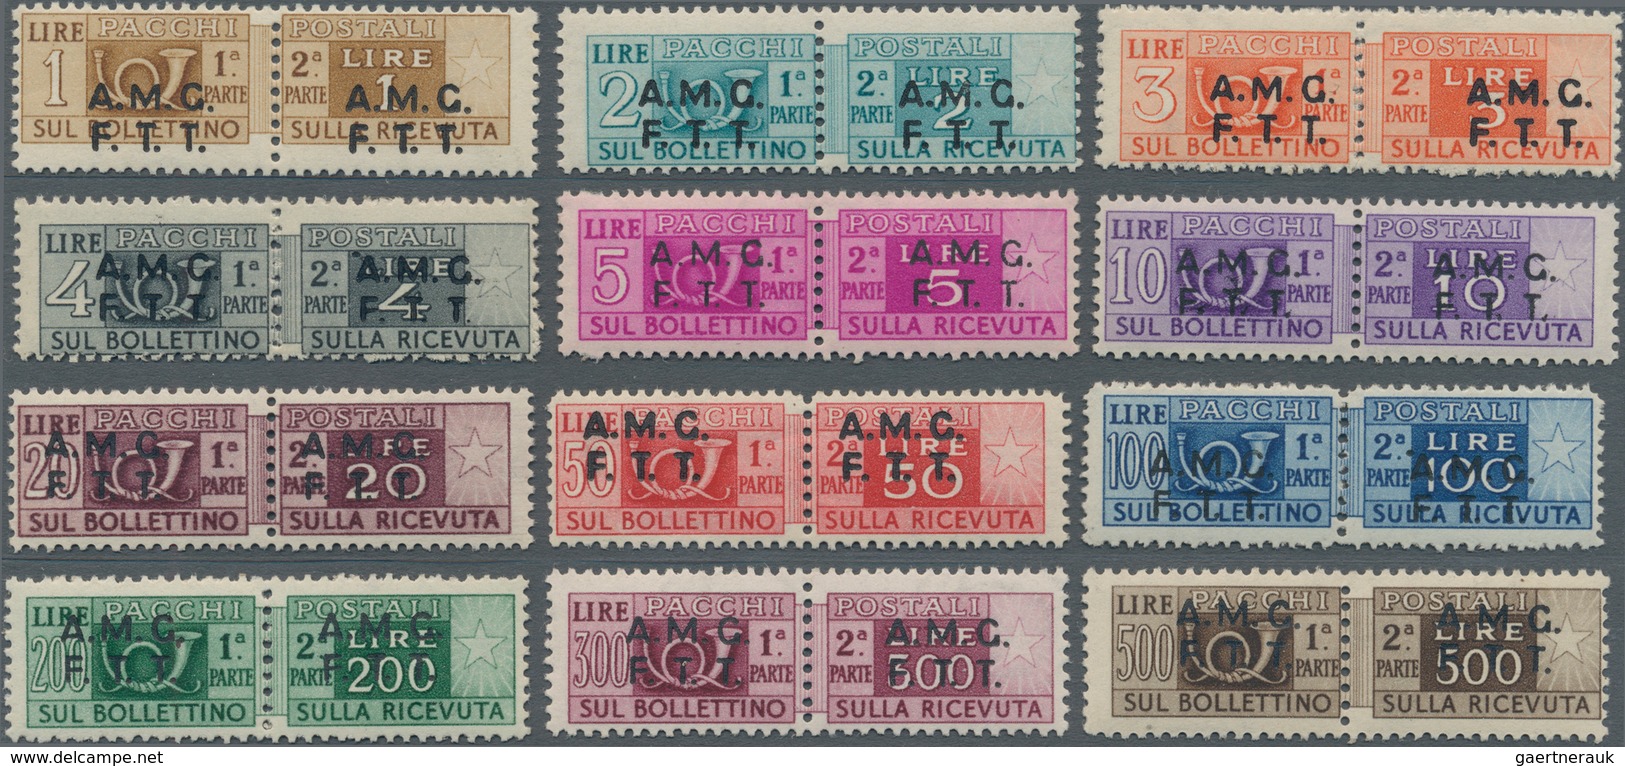 Triest - Zone A - Paketmarken: 1947/1948. Comtemponary Italian Parcel Post Adhesives Overprinted "A. - Colis Postaux/concession